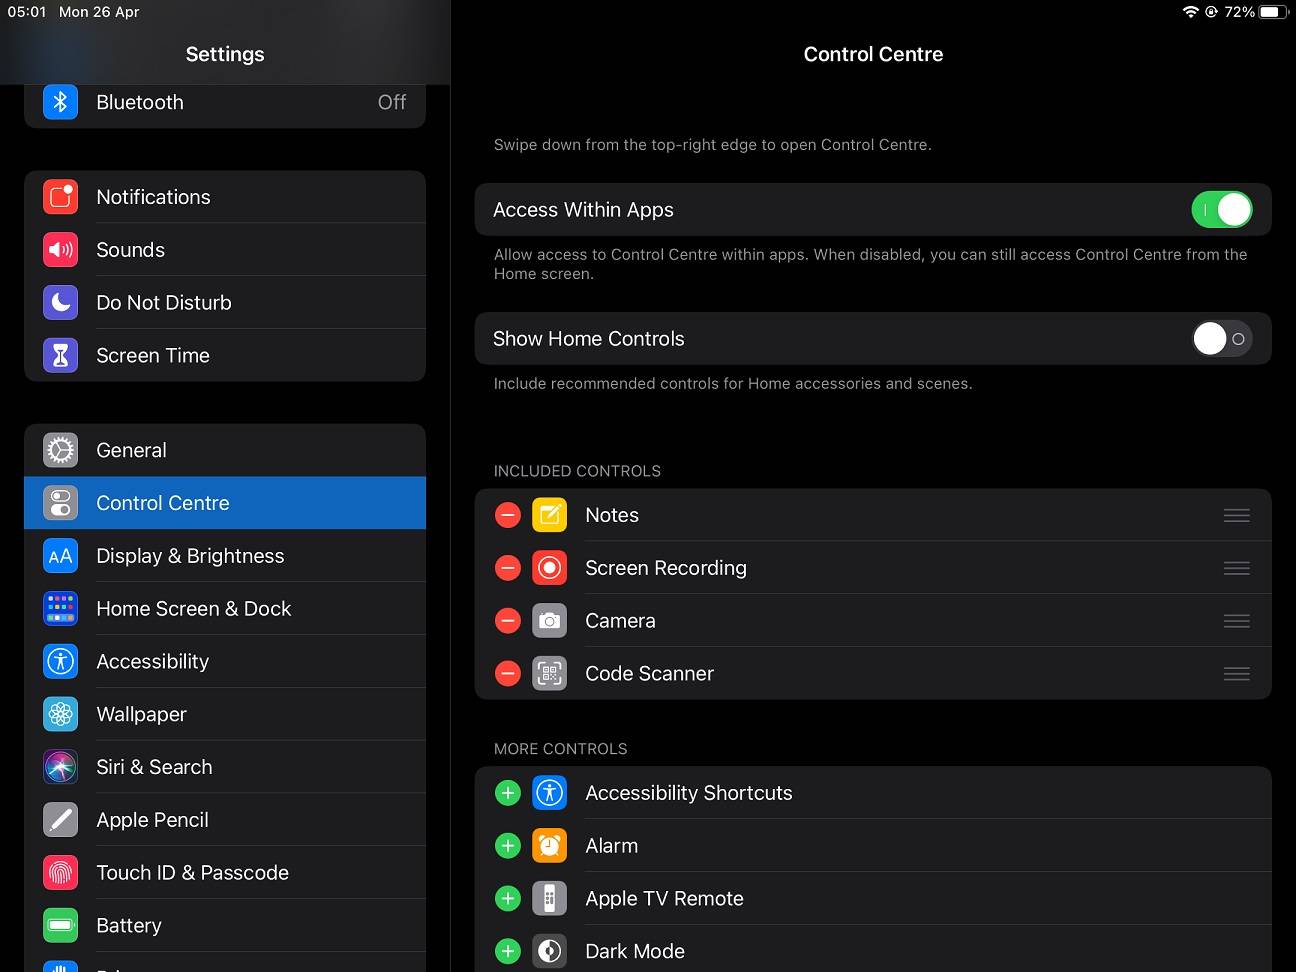 Apple iOS 14 and iPadOS 14 Control Centre